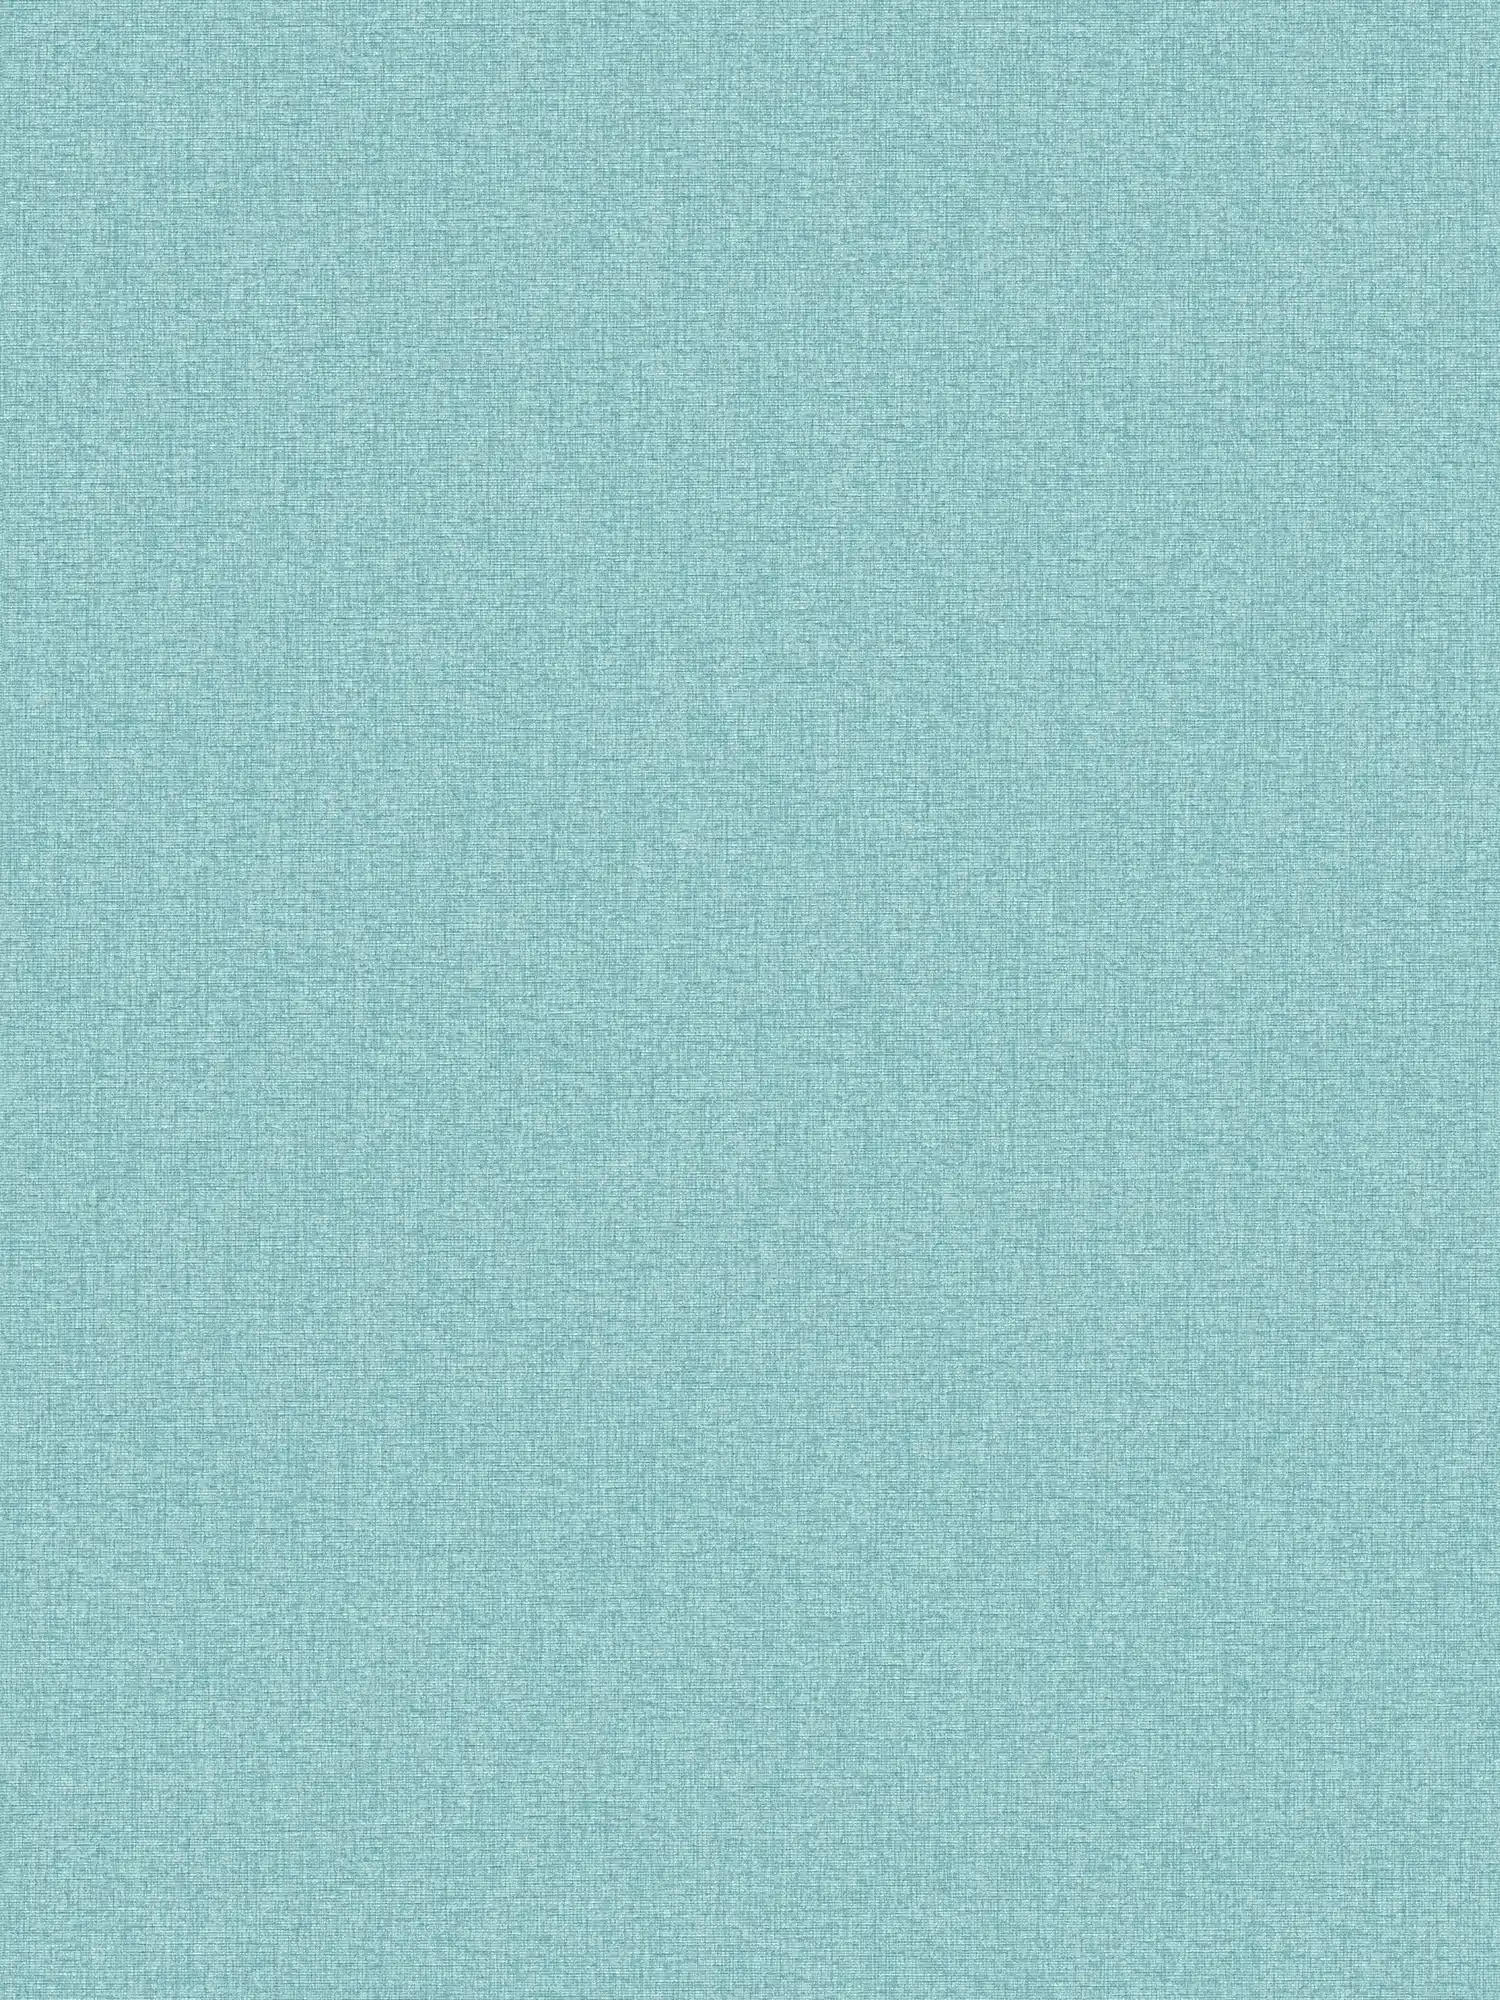 Effen vliesbehang in weefsellook met lichte structuur, mat - turkoois, blauw, lichtblauw
